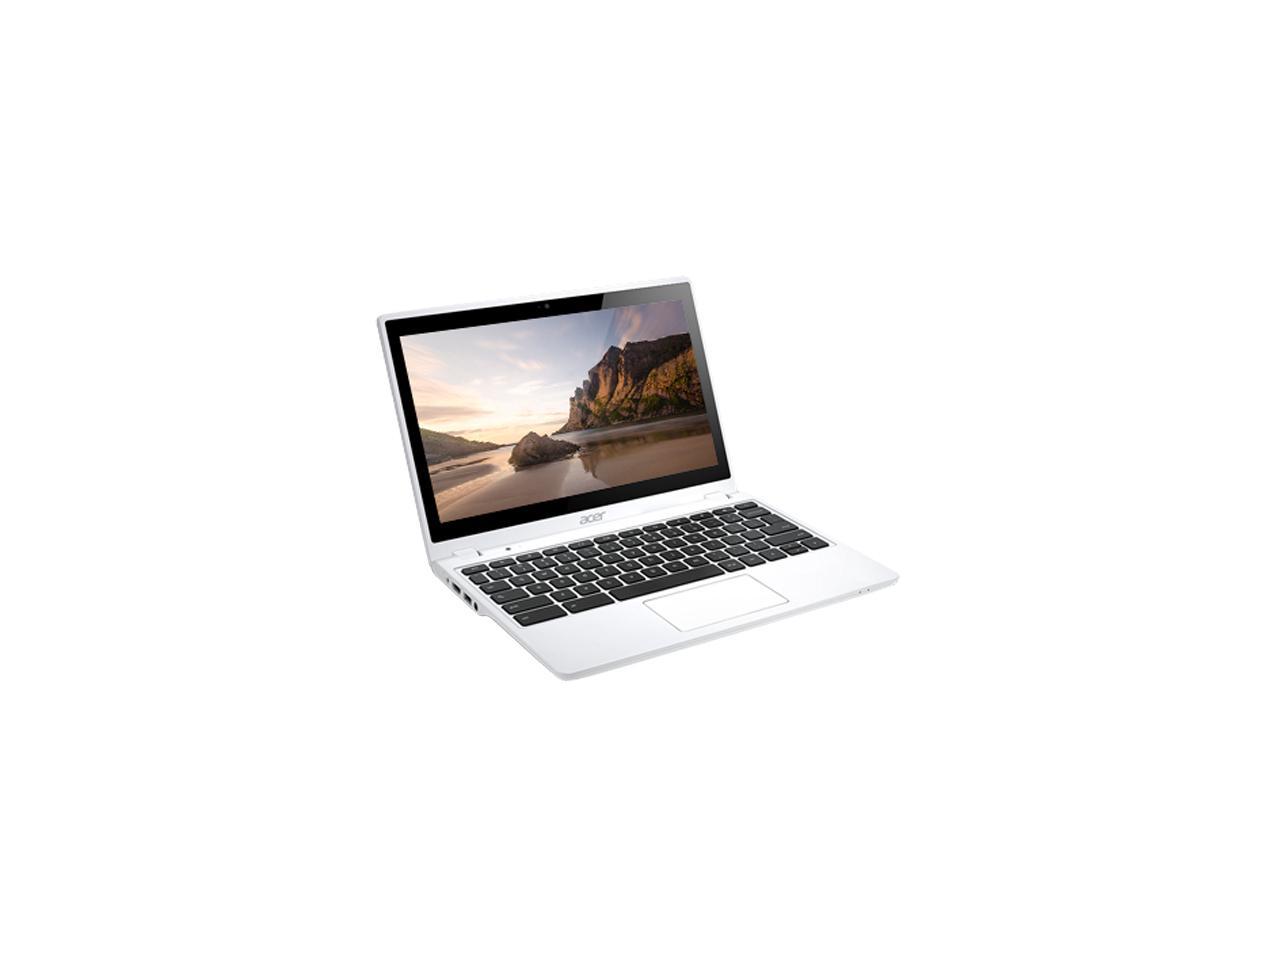 Acer Aspire C720p 2457 Chromebook Intel Celeron 2955u 14ghz 116